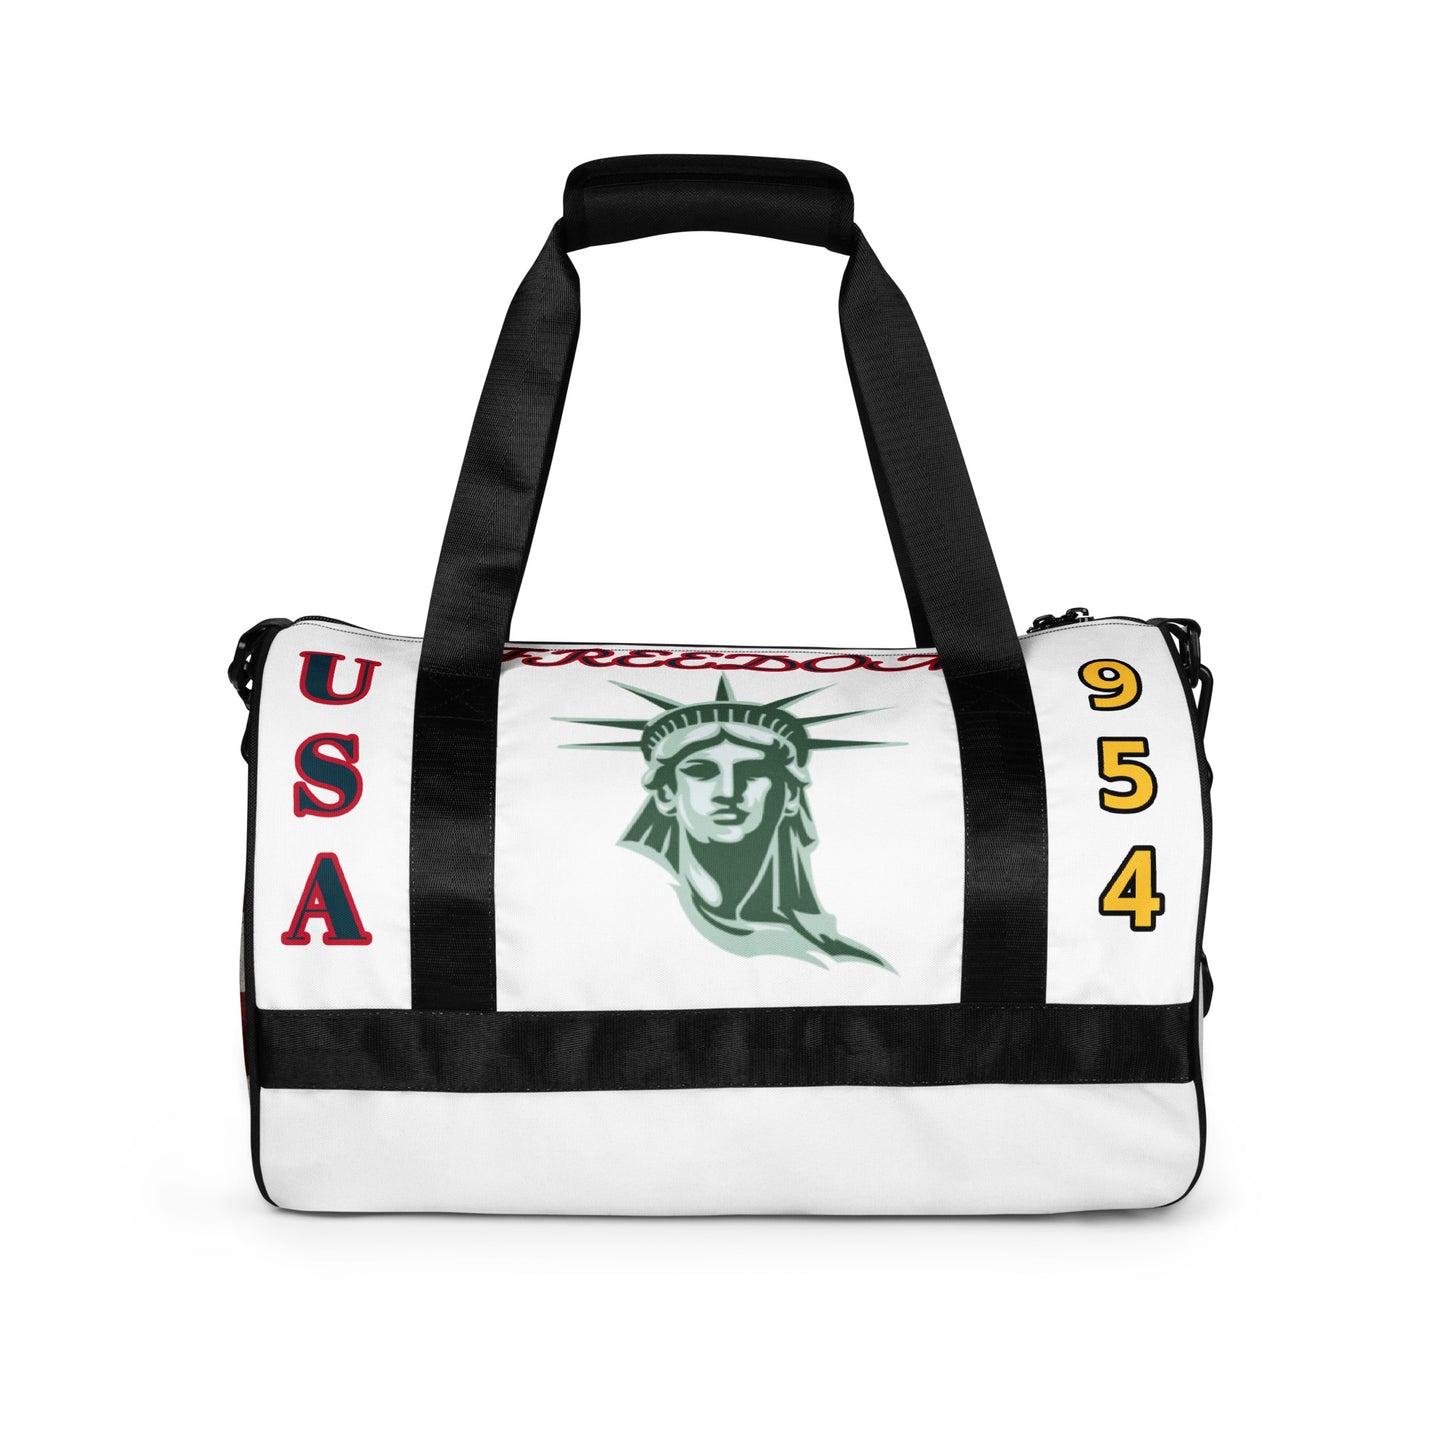 USA 954 Signature Day bag